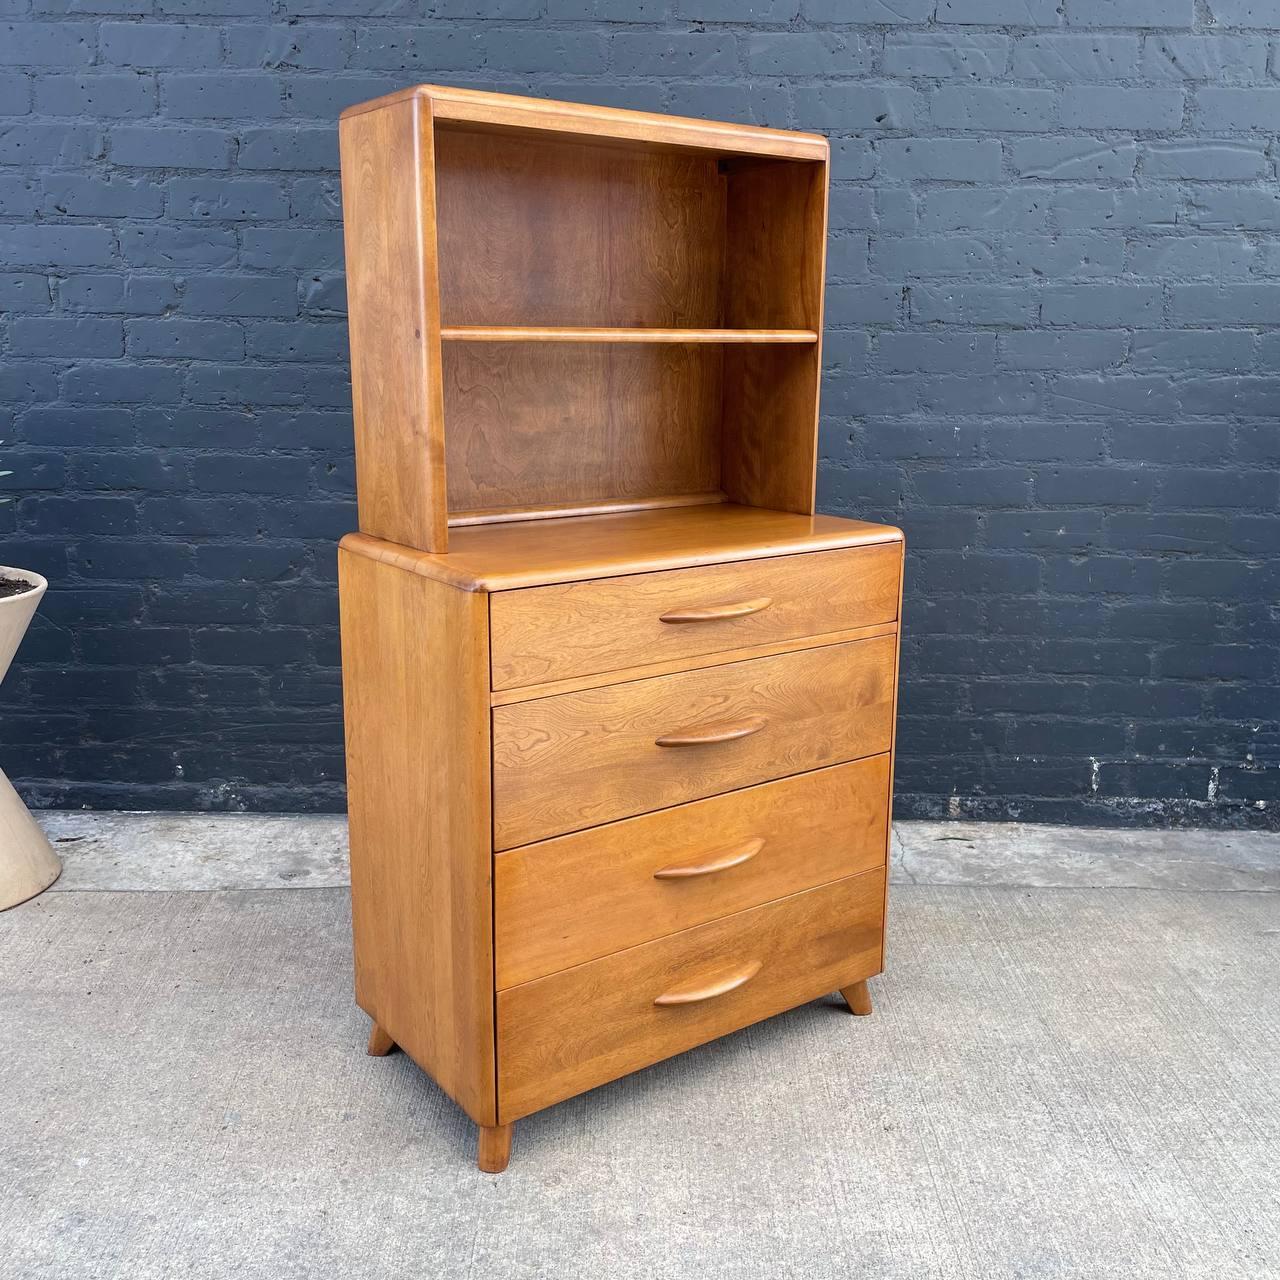 Vintage Mid-Century Modern Dresser Bookcase by Heywood Wakefield

Original Vintage Condition

Dimensions: 58”H x 31.50”W x 17”D
